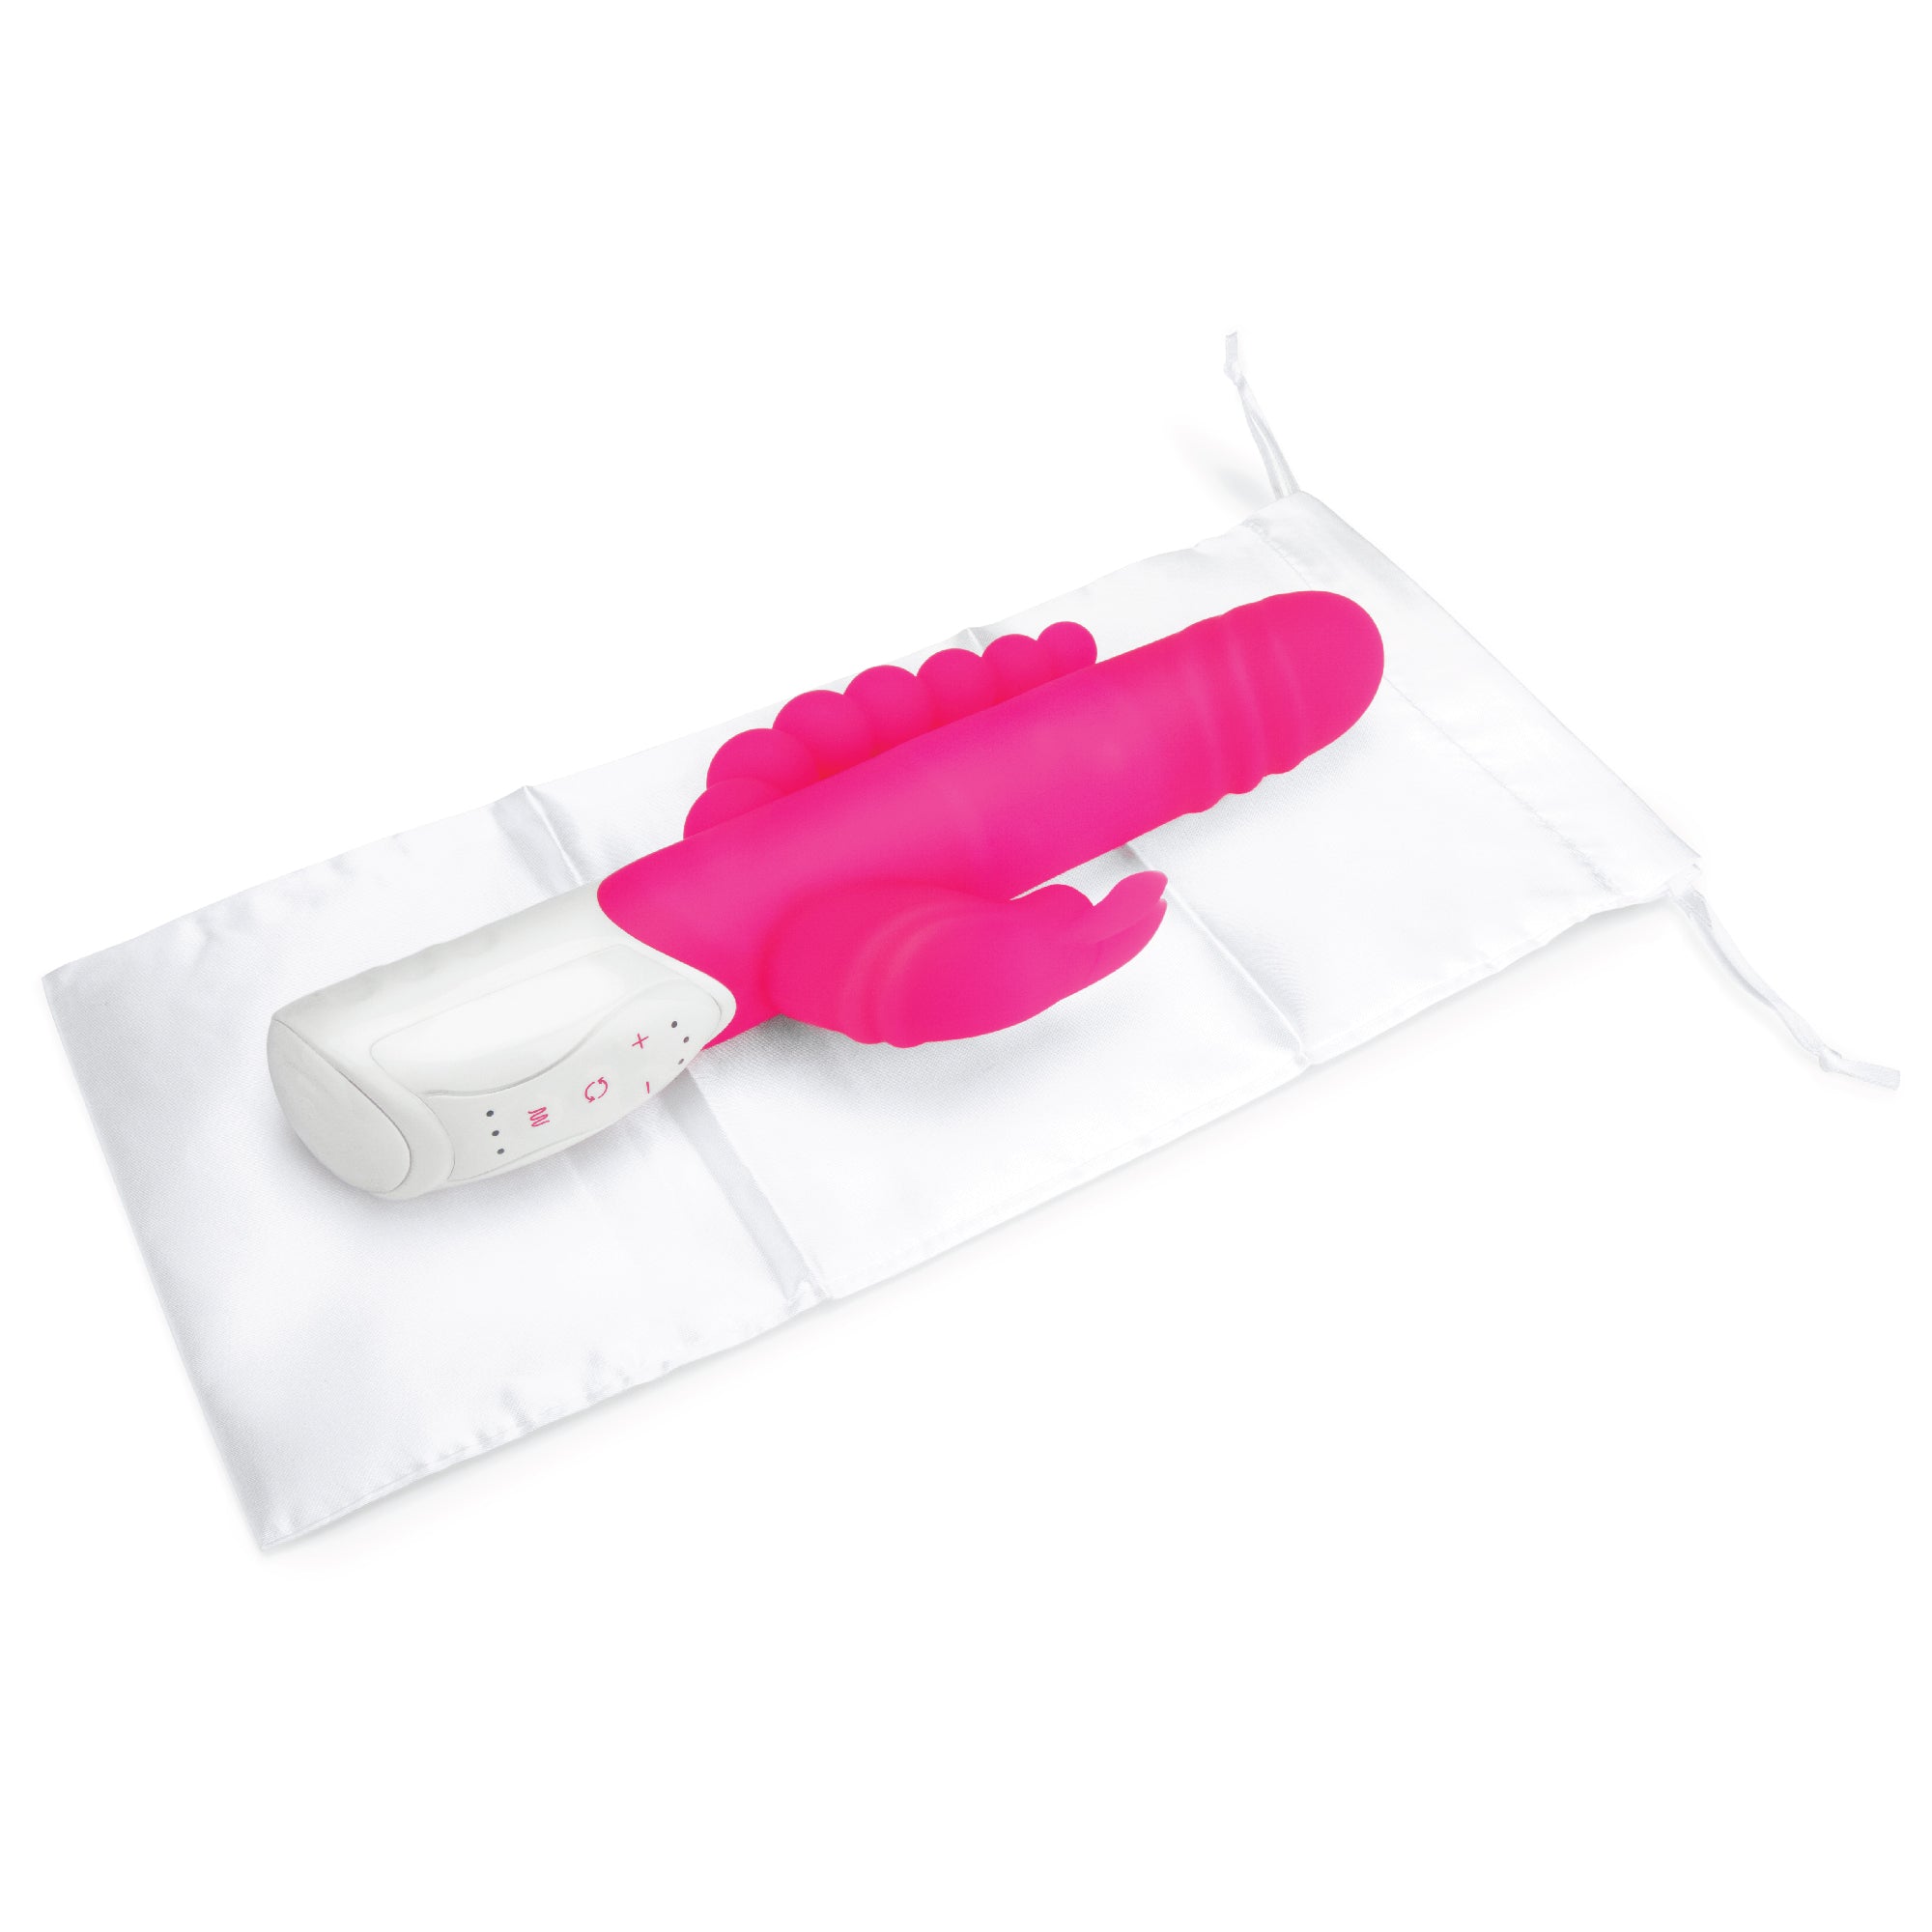 Rechargeable Double Penetration Rabbit Vibrator - Hot Pink